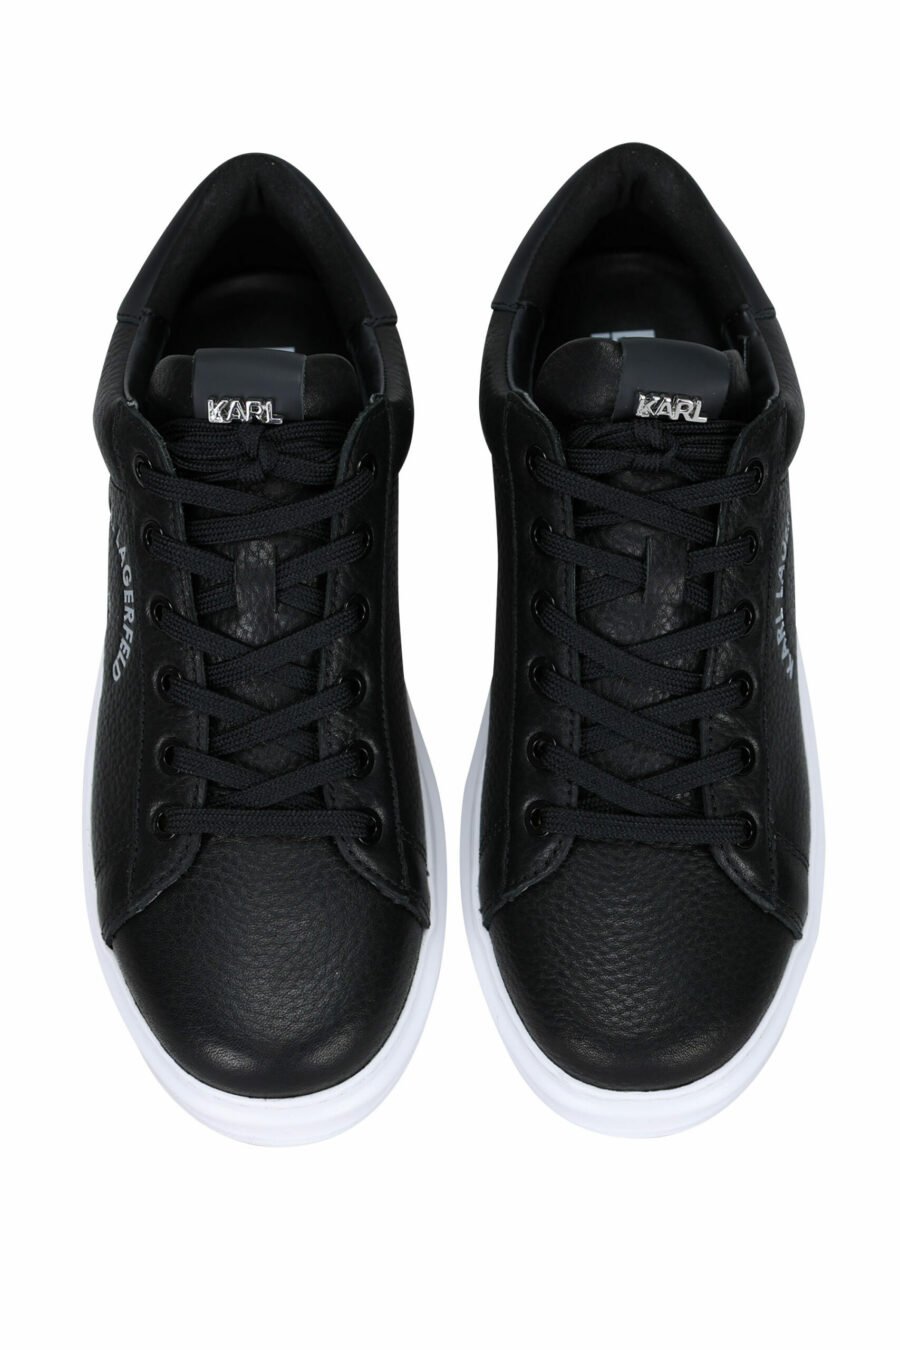 Zapatillas negras "kapri mens" con textura y logo "rue st guillaume" blanco - 5059529323782 4 scaled